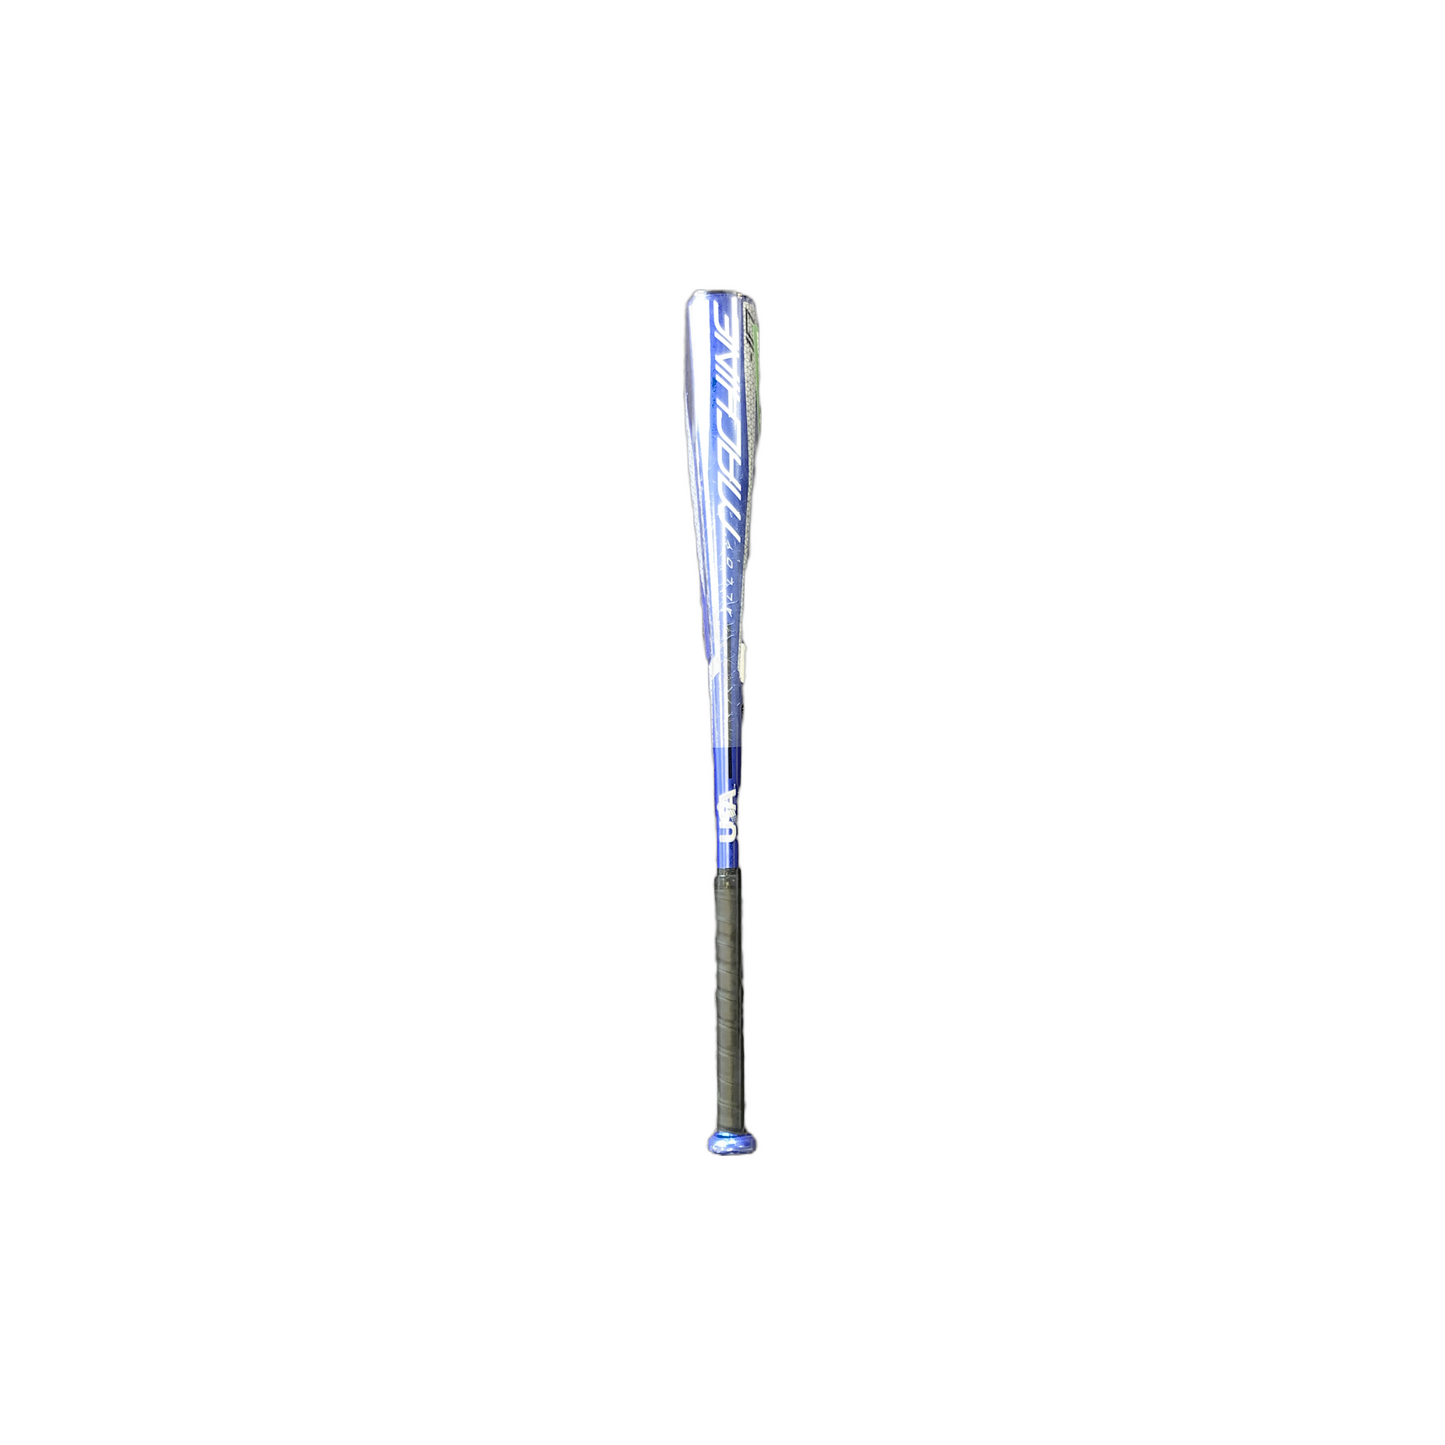 Rawlings MACHINE baseball bat. Length 28” Diameter 2 USMC10 – in the Lowell